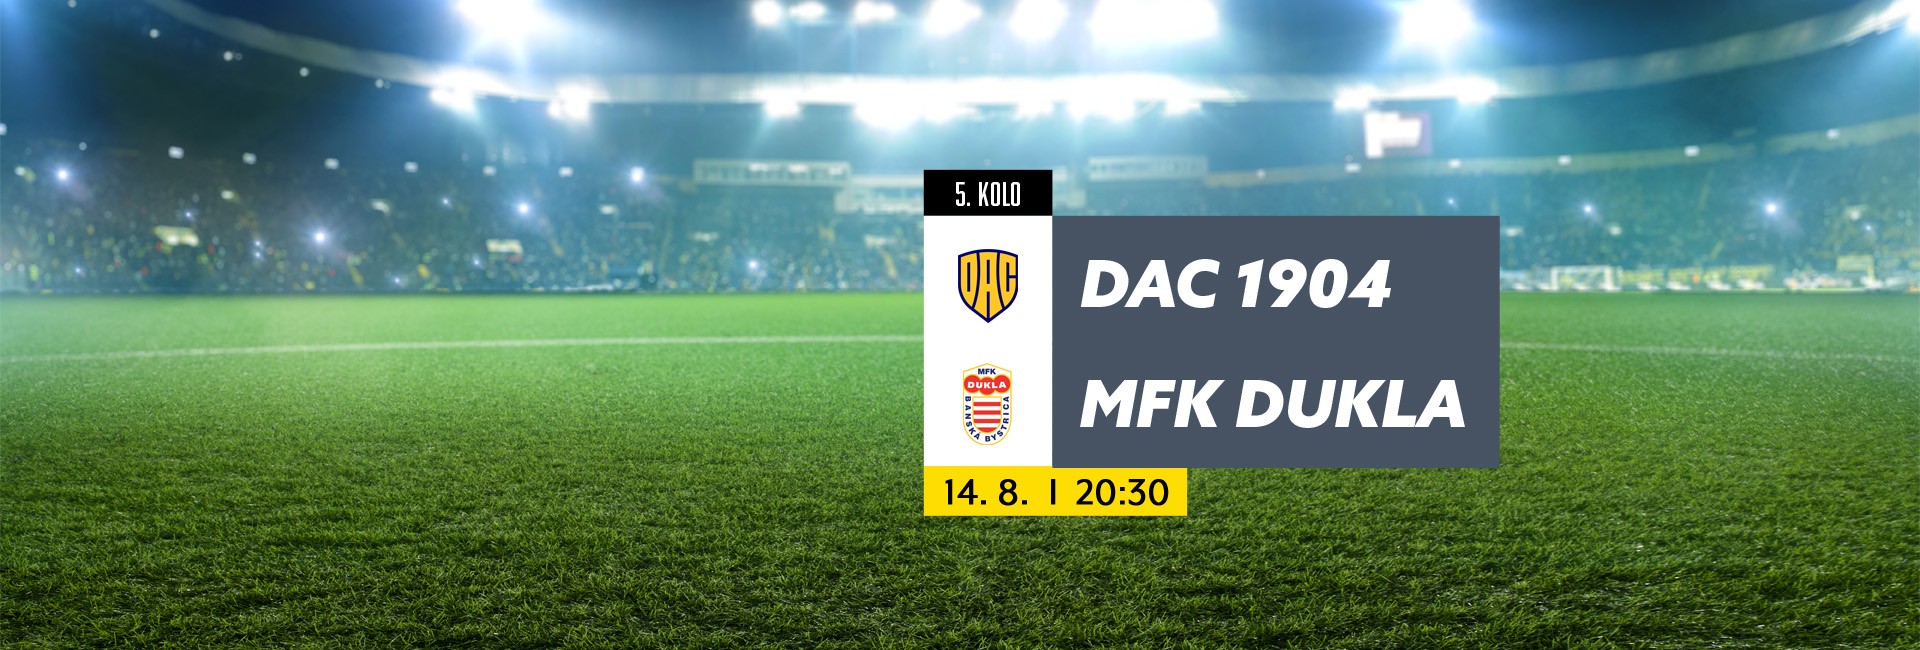 FC DAC 1904 Dunajská Streda – MFK Dukla Banská Bystrica (14. 8. 2022 20:30)